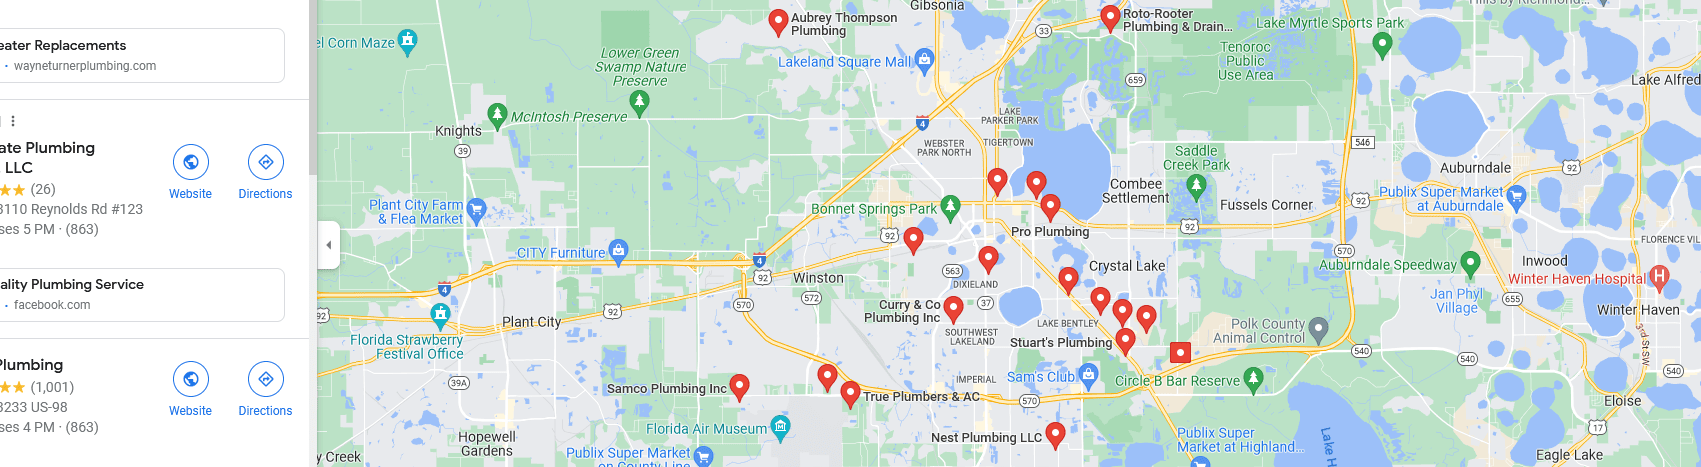 google map of lakeland florida